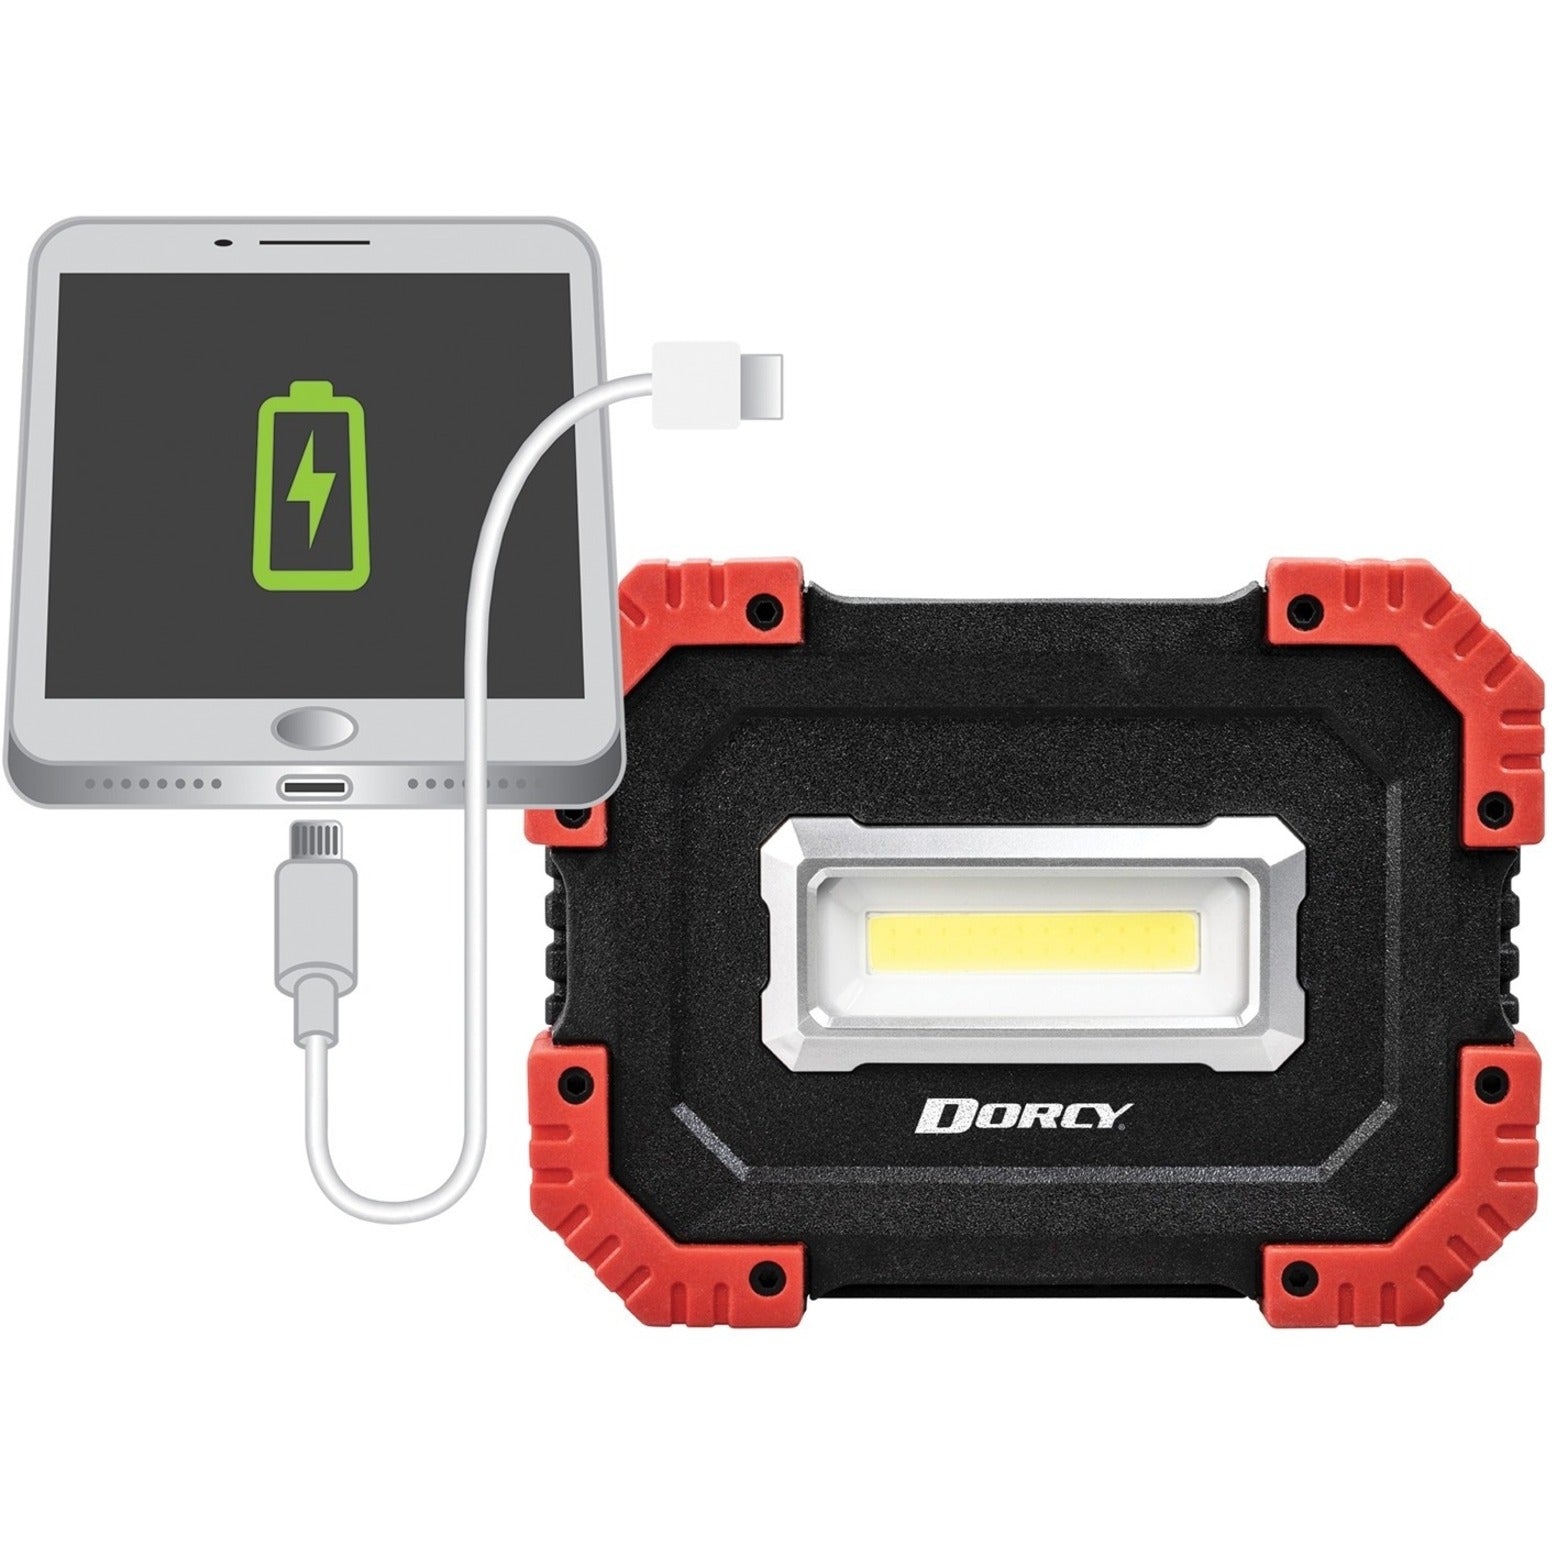 Dorcy 41-4336 Ultra HD Rechargeable Utility Light + Power Bank, 1500 Lumen, USB Charging Port, Drop Resistant, Weather Resistant, Water Resistant, Impact Resistant